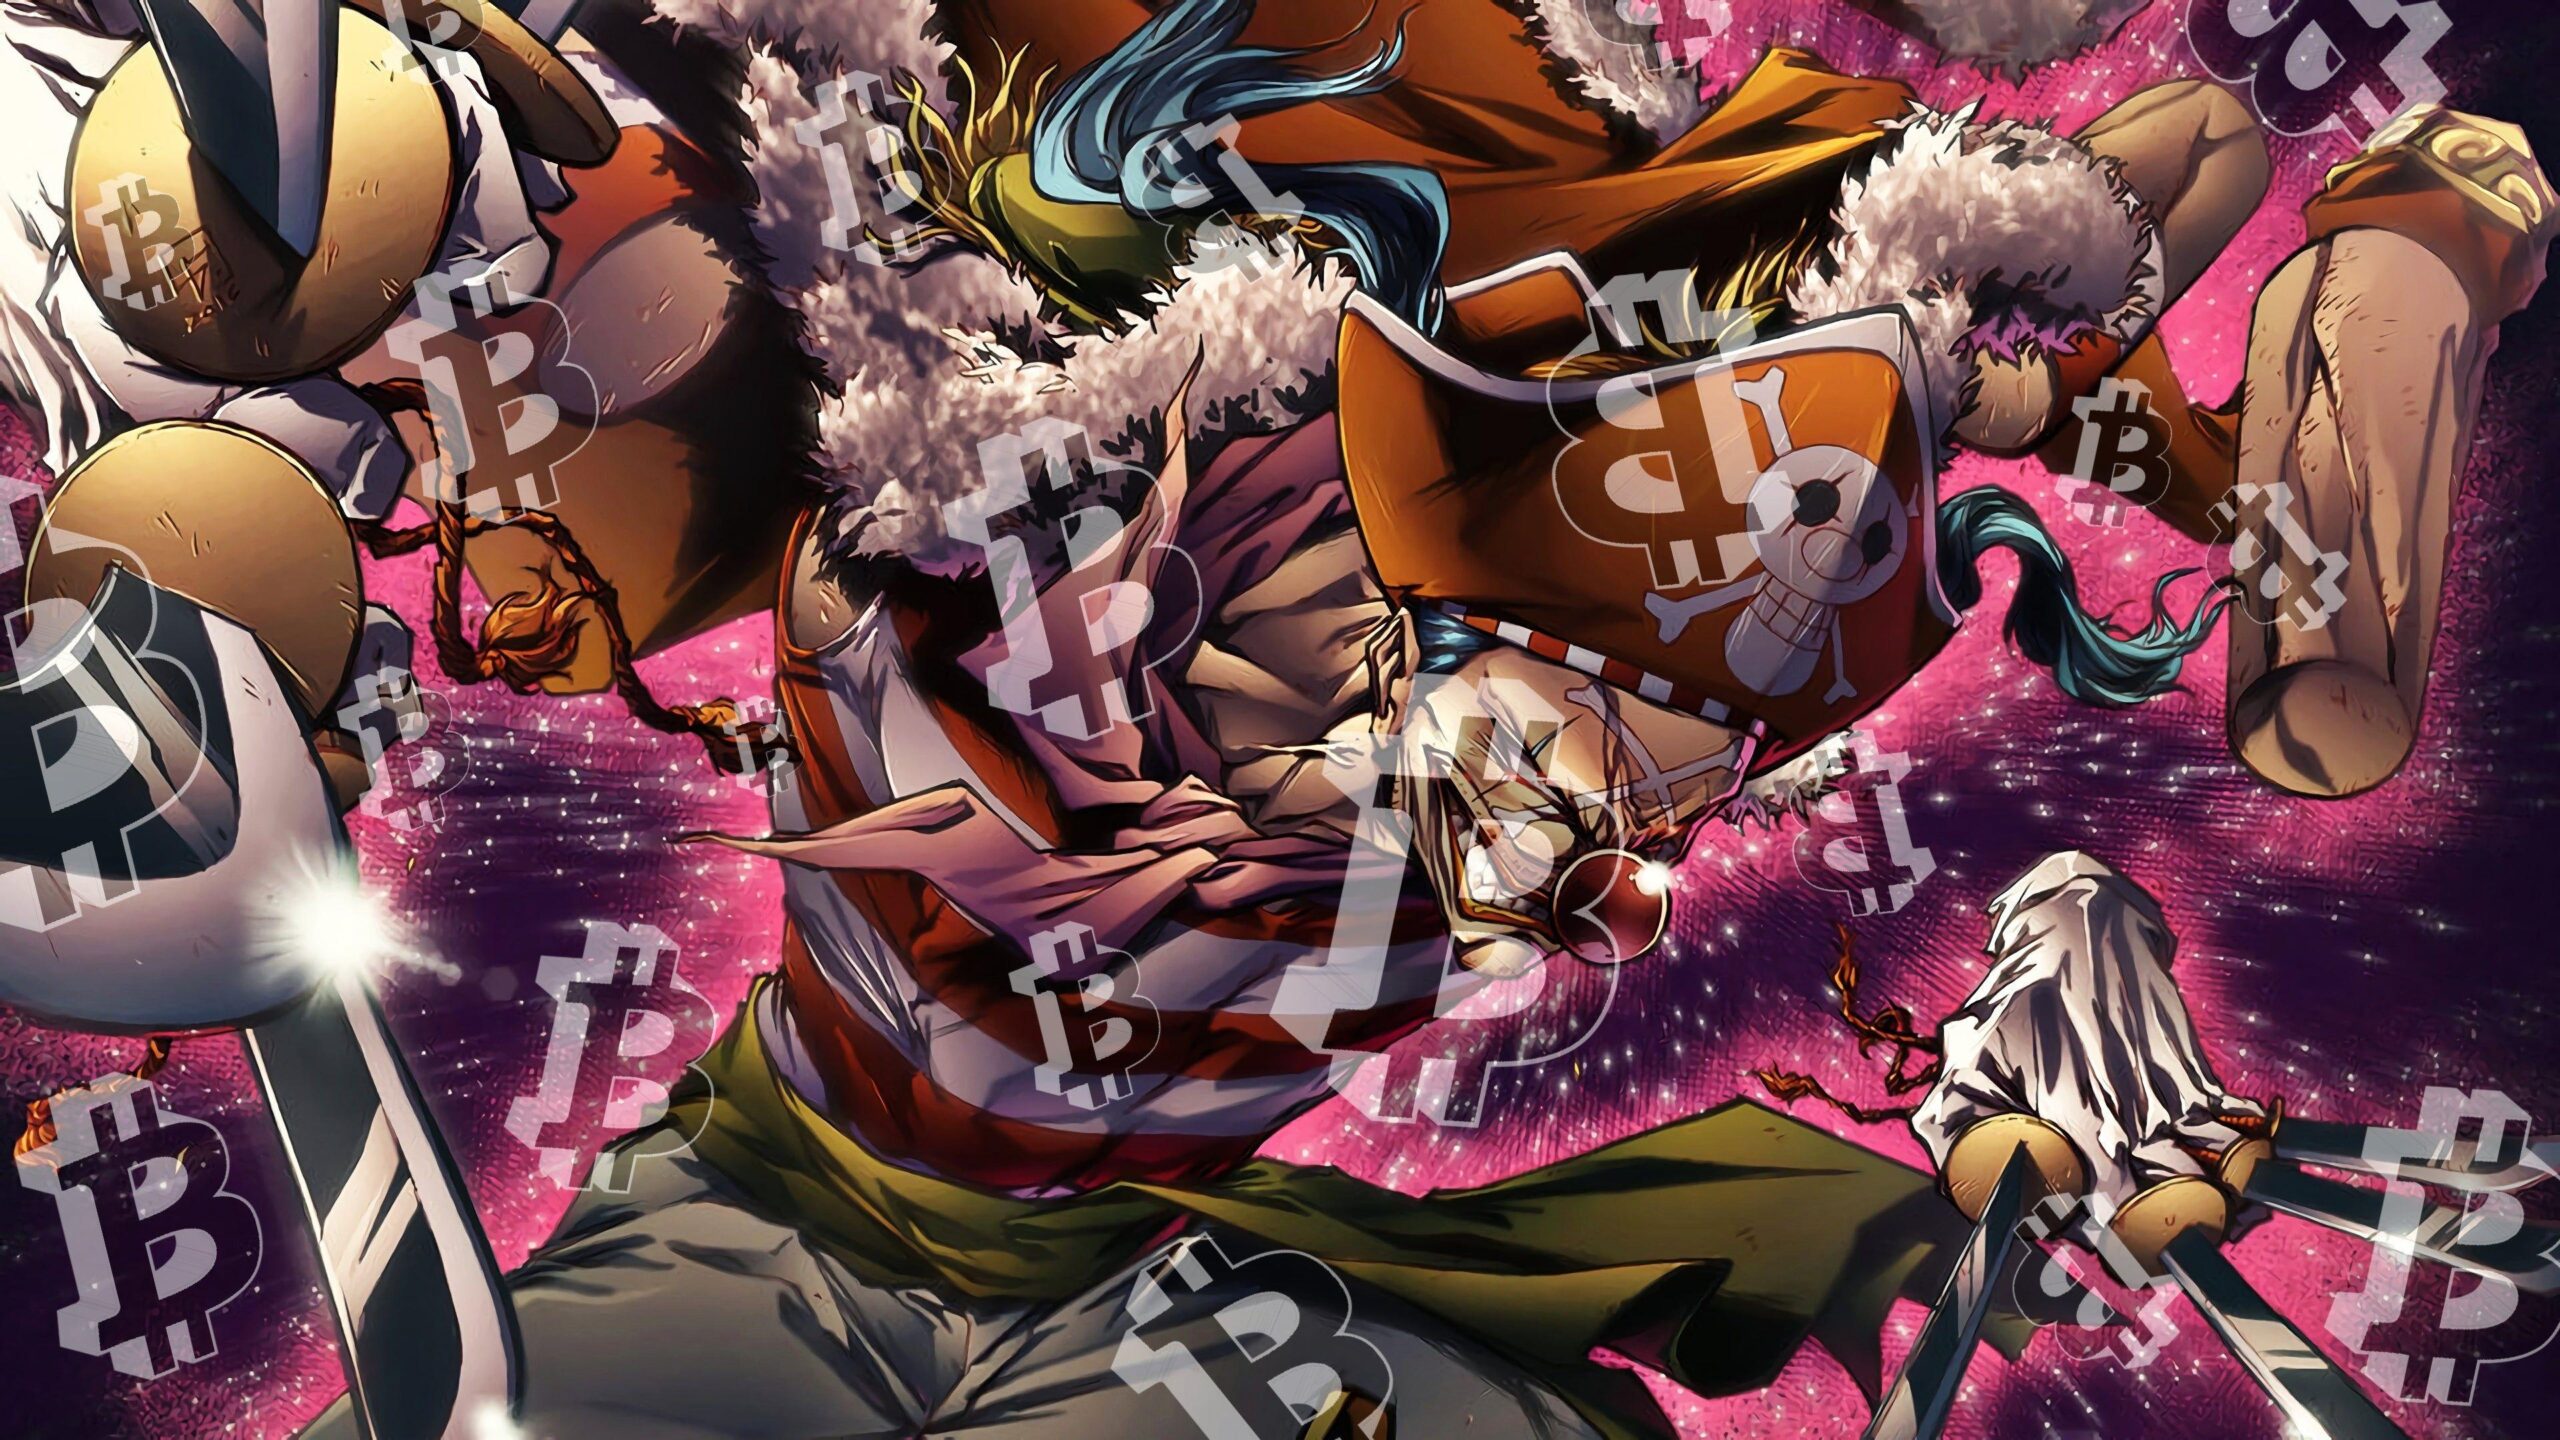 Buggy Desktop Wallpaper Hd, One Piece, Anime